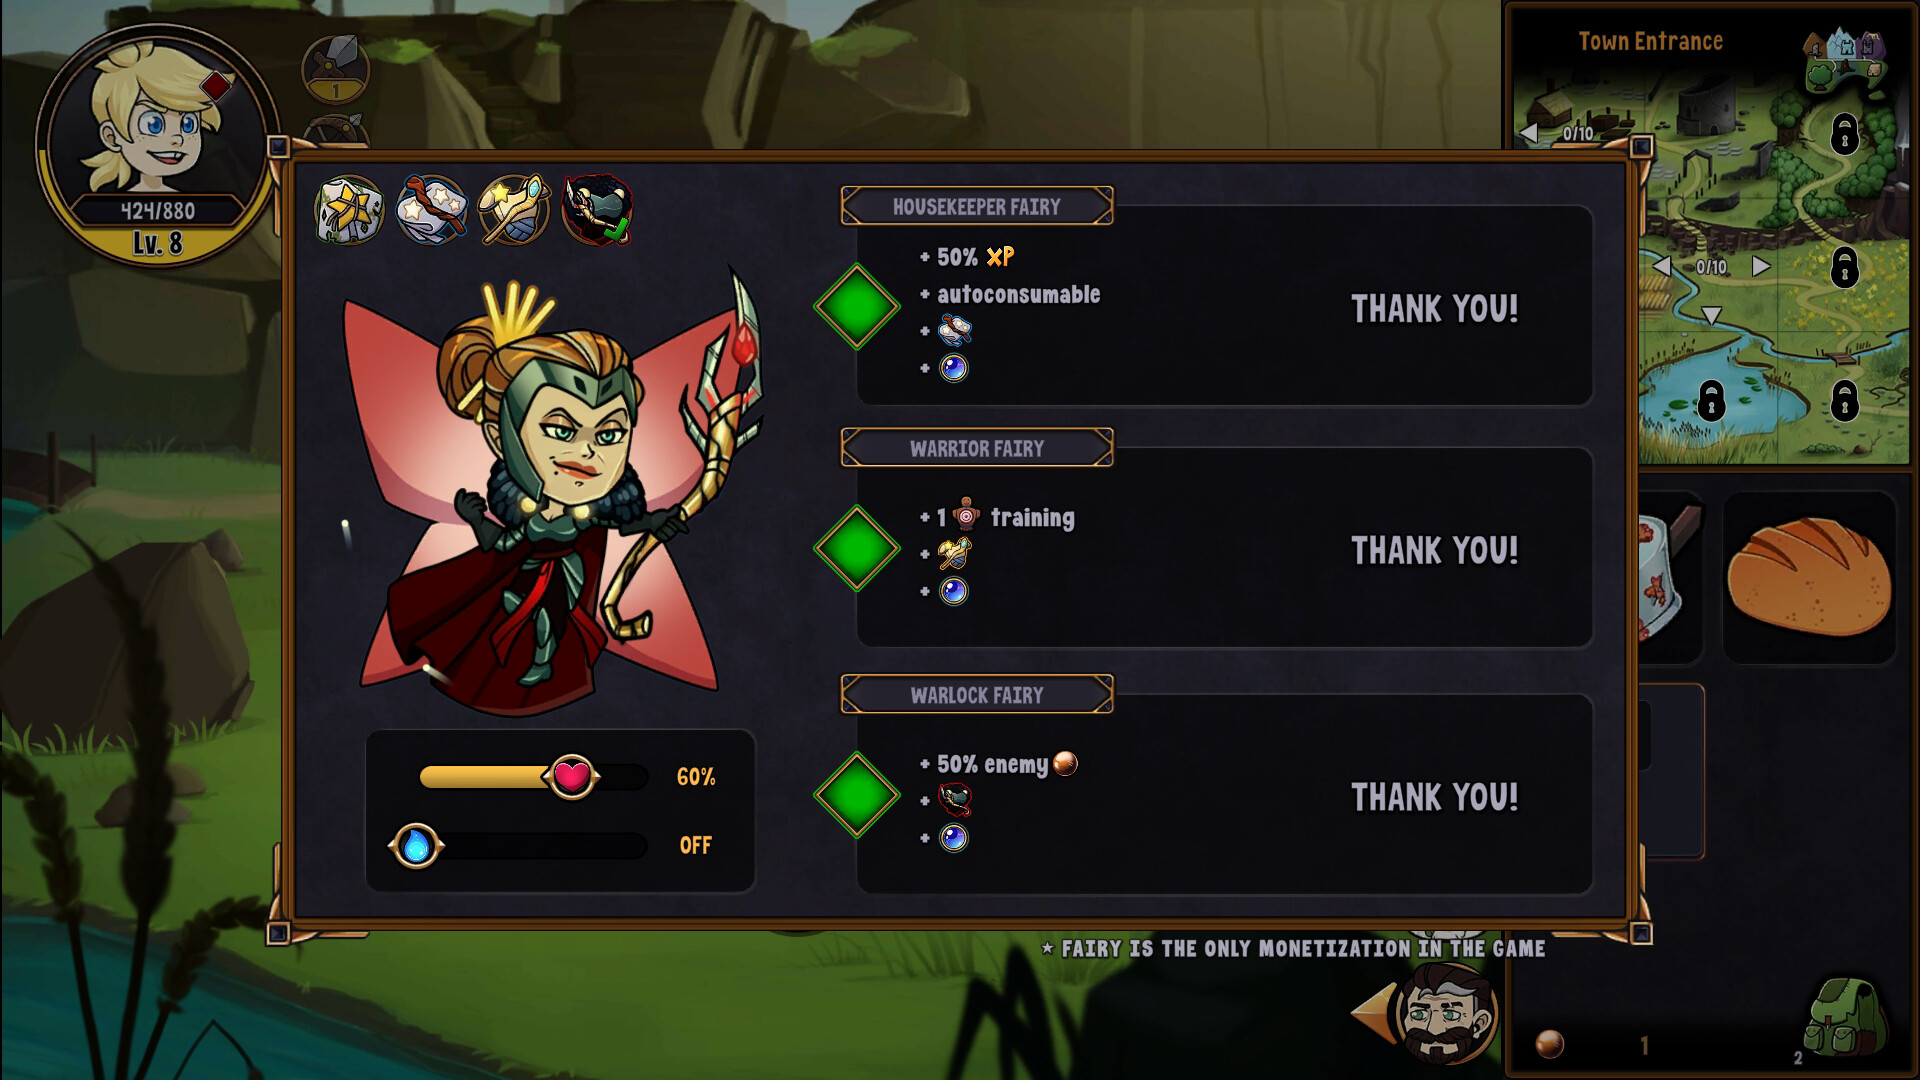 Hero Tale - Warlock Fairy Featured Screenshot #1